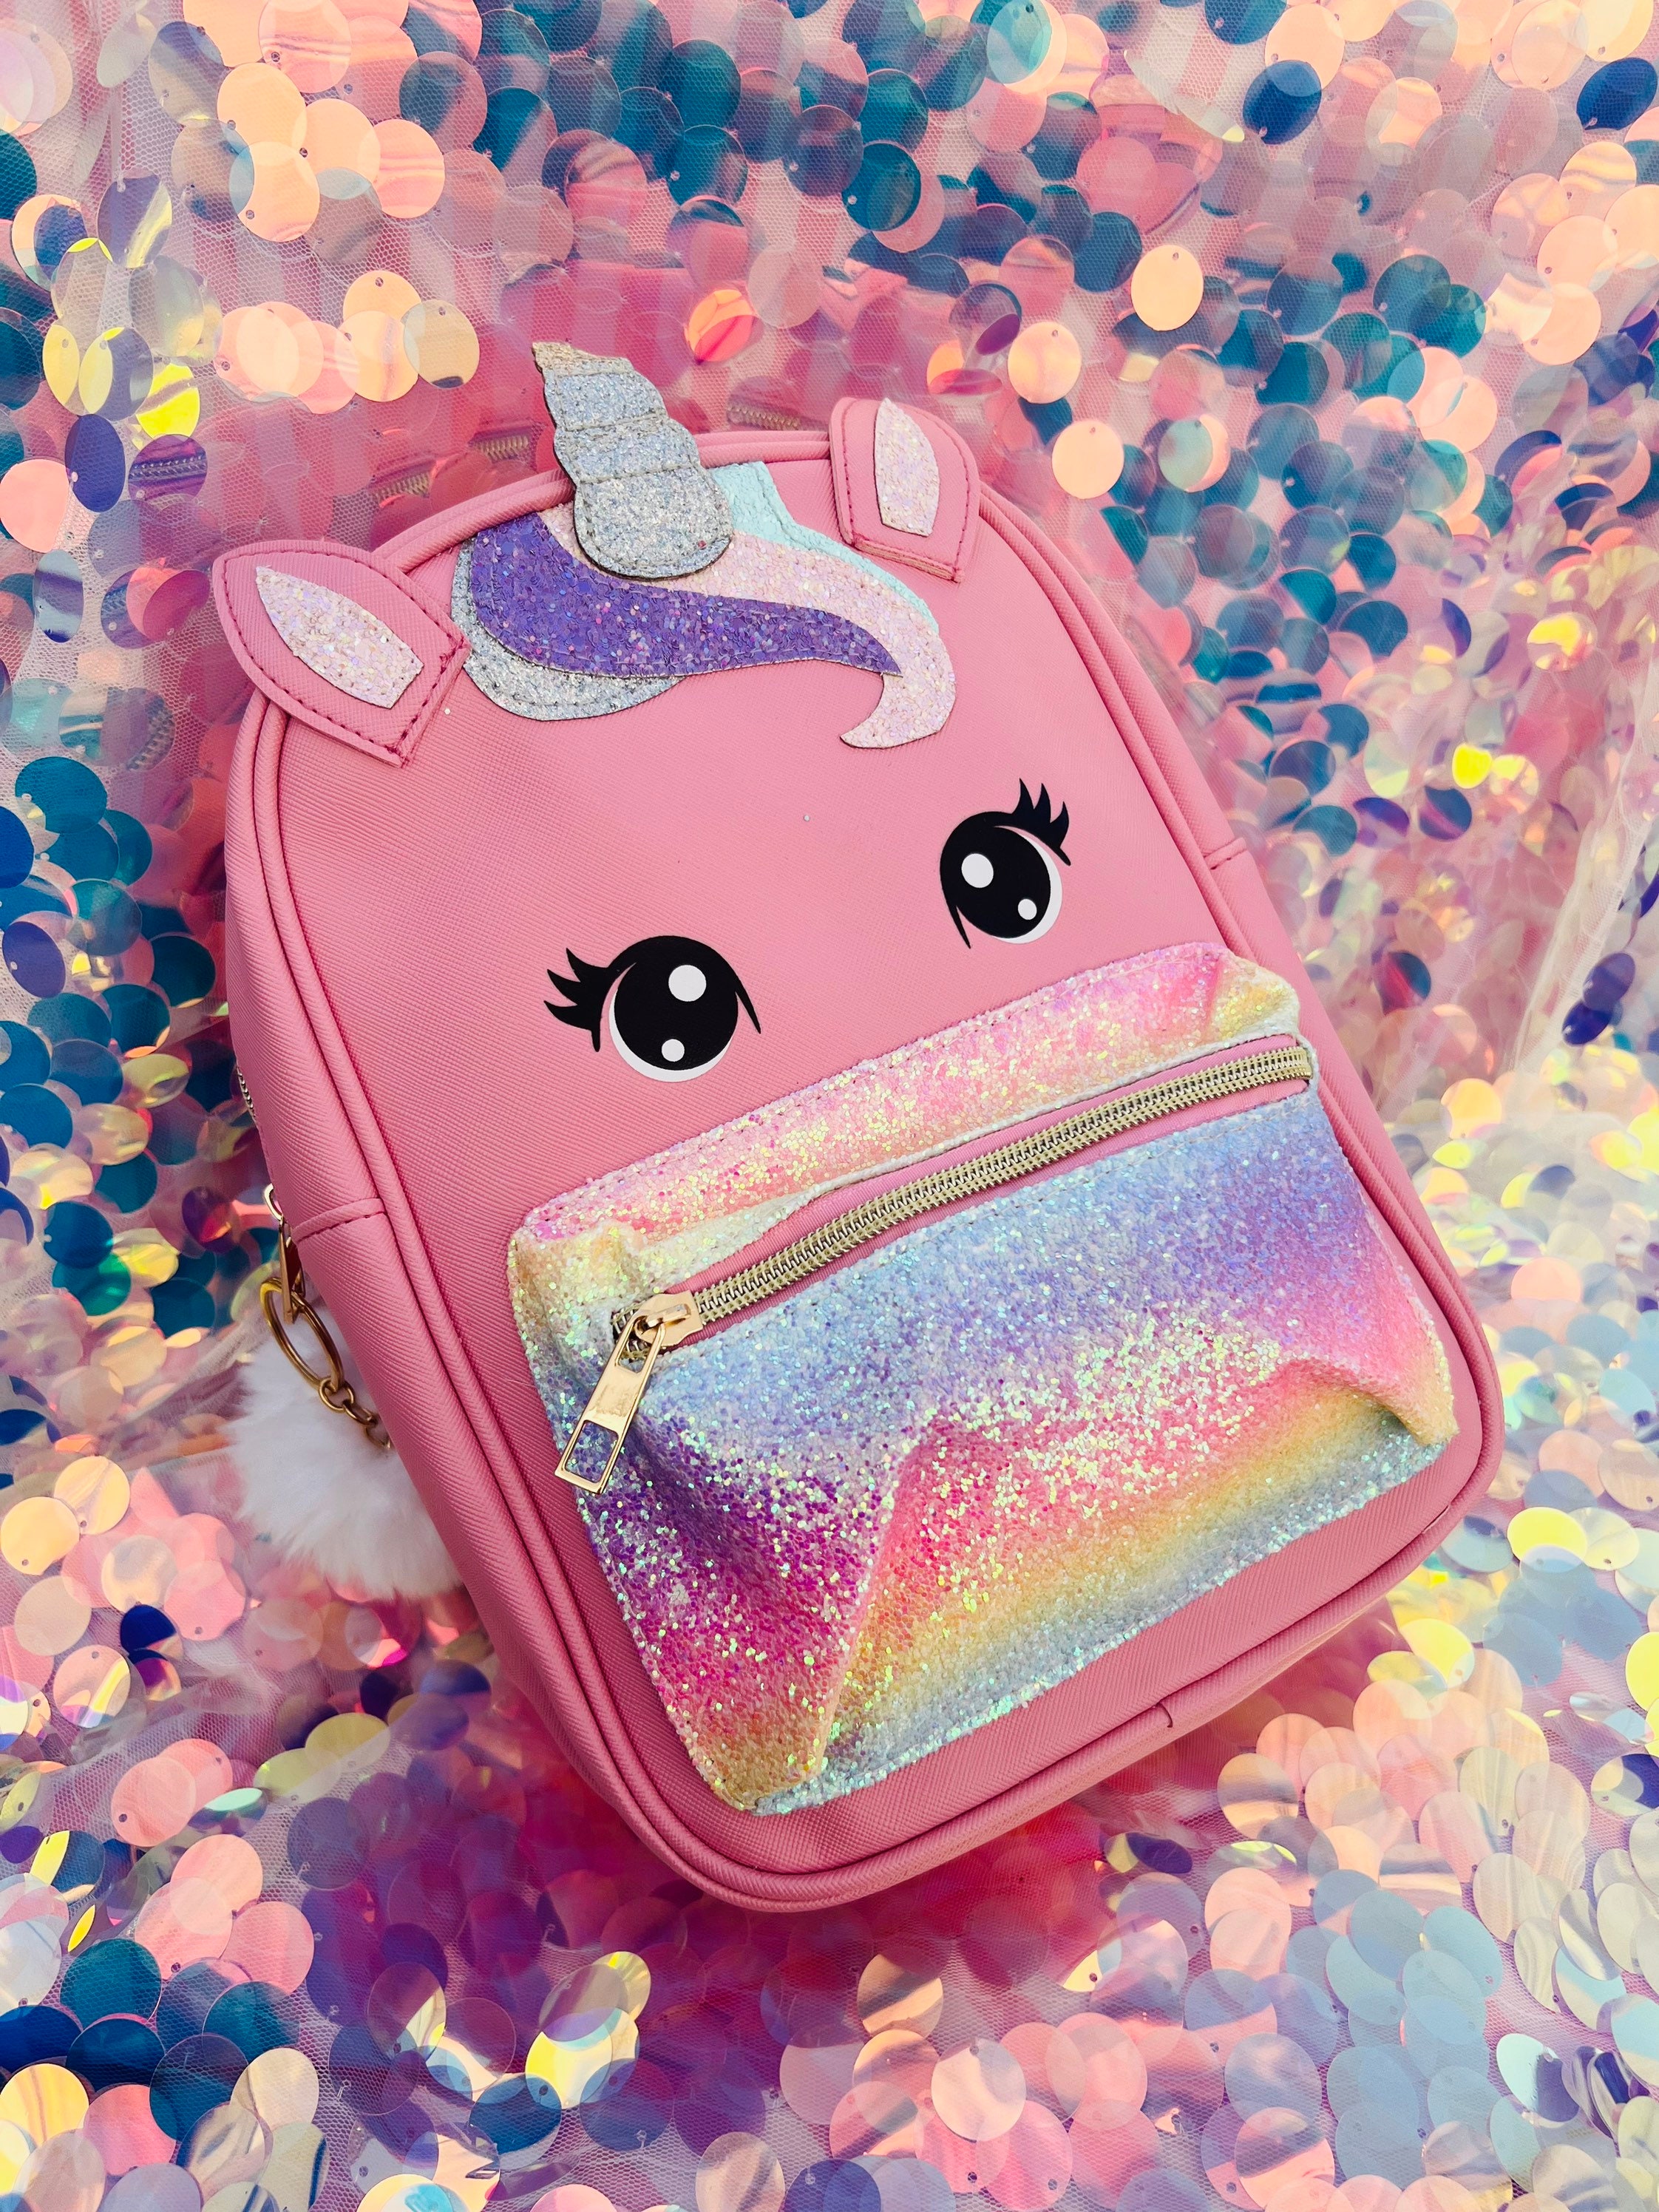 Mystery Box Surprise Box Cute Novelty Unicorn Backpack - Etsy